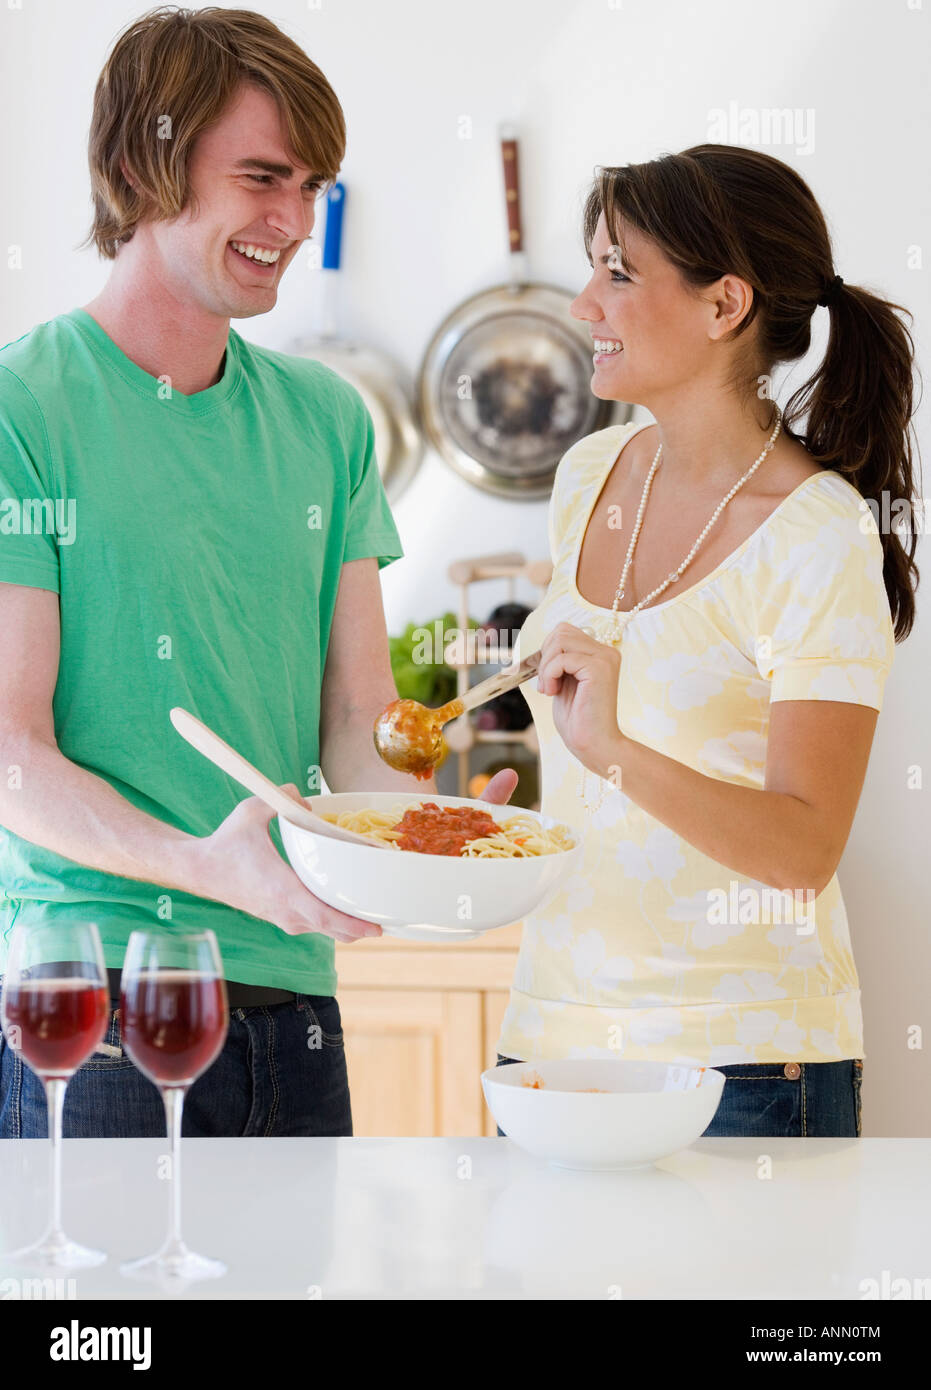 Couple preparing food in kitchen Stock Photo